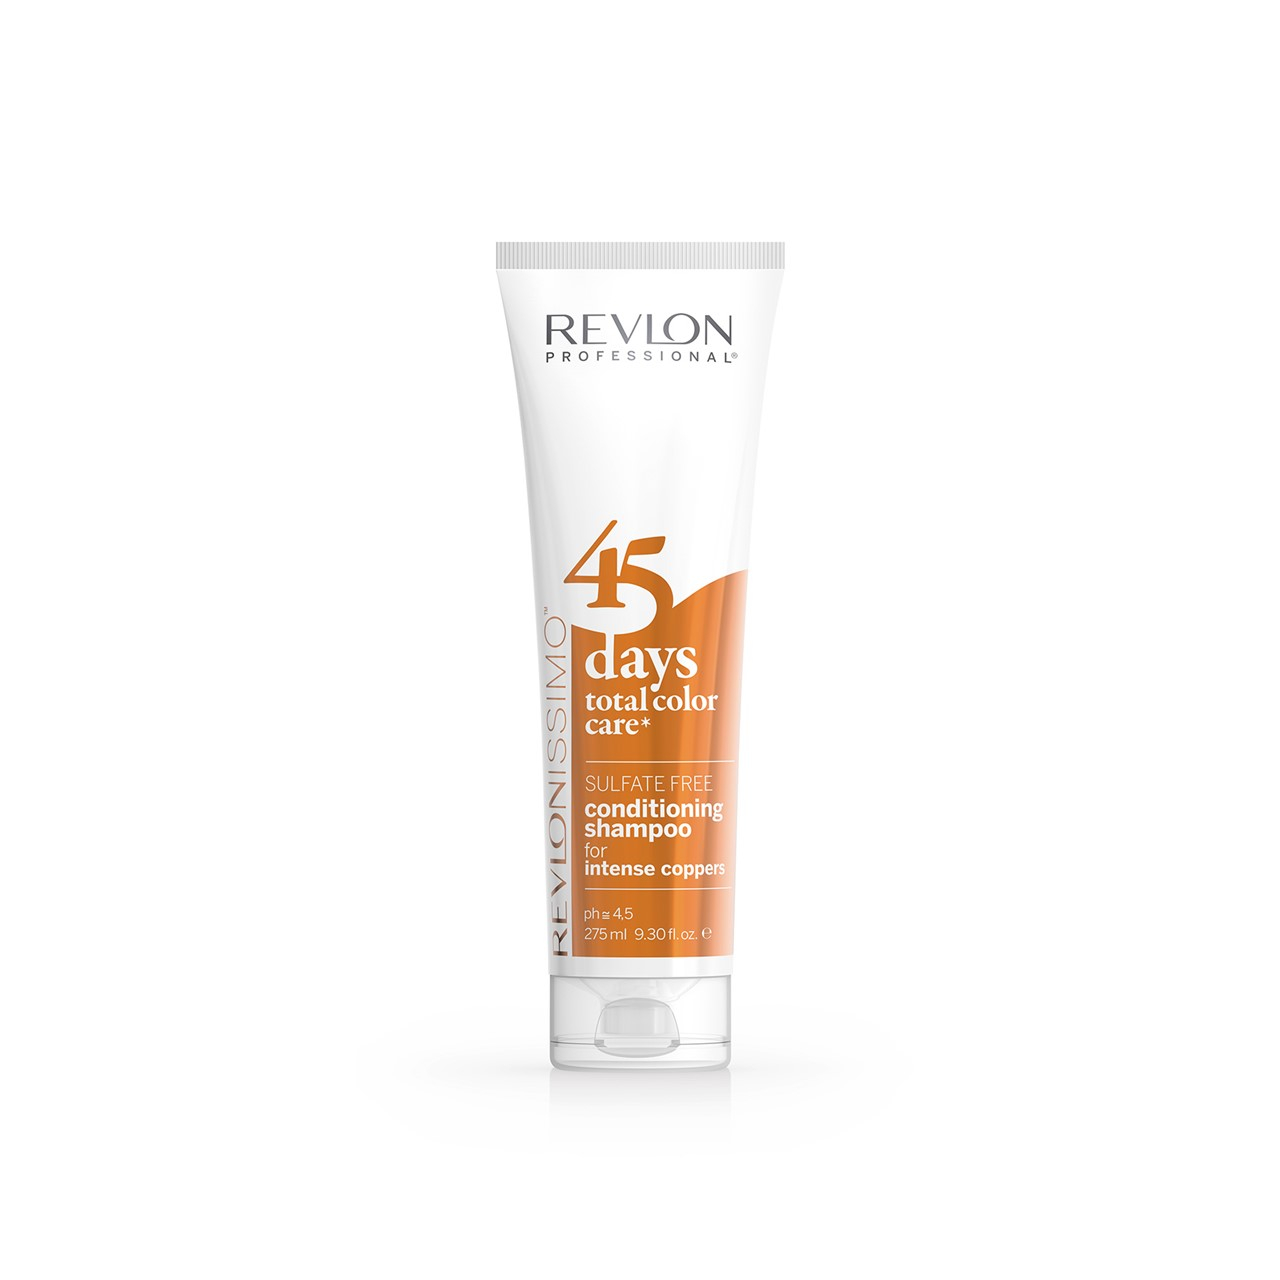 Revlon Professional Revlonissimo 45 Days Conditioning Shampoo Intense Coppers 275ml